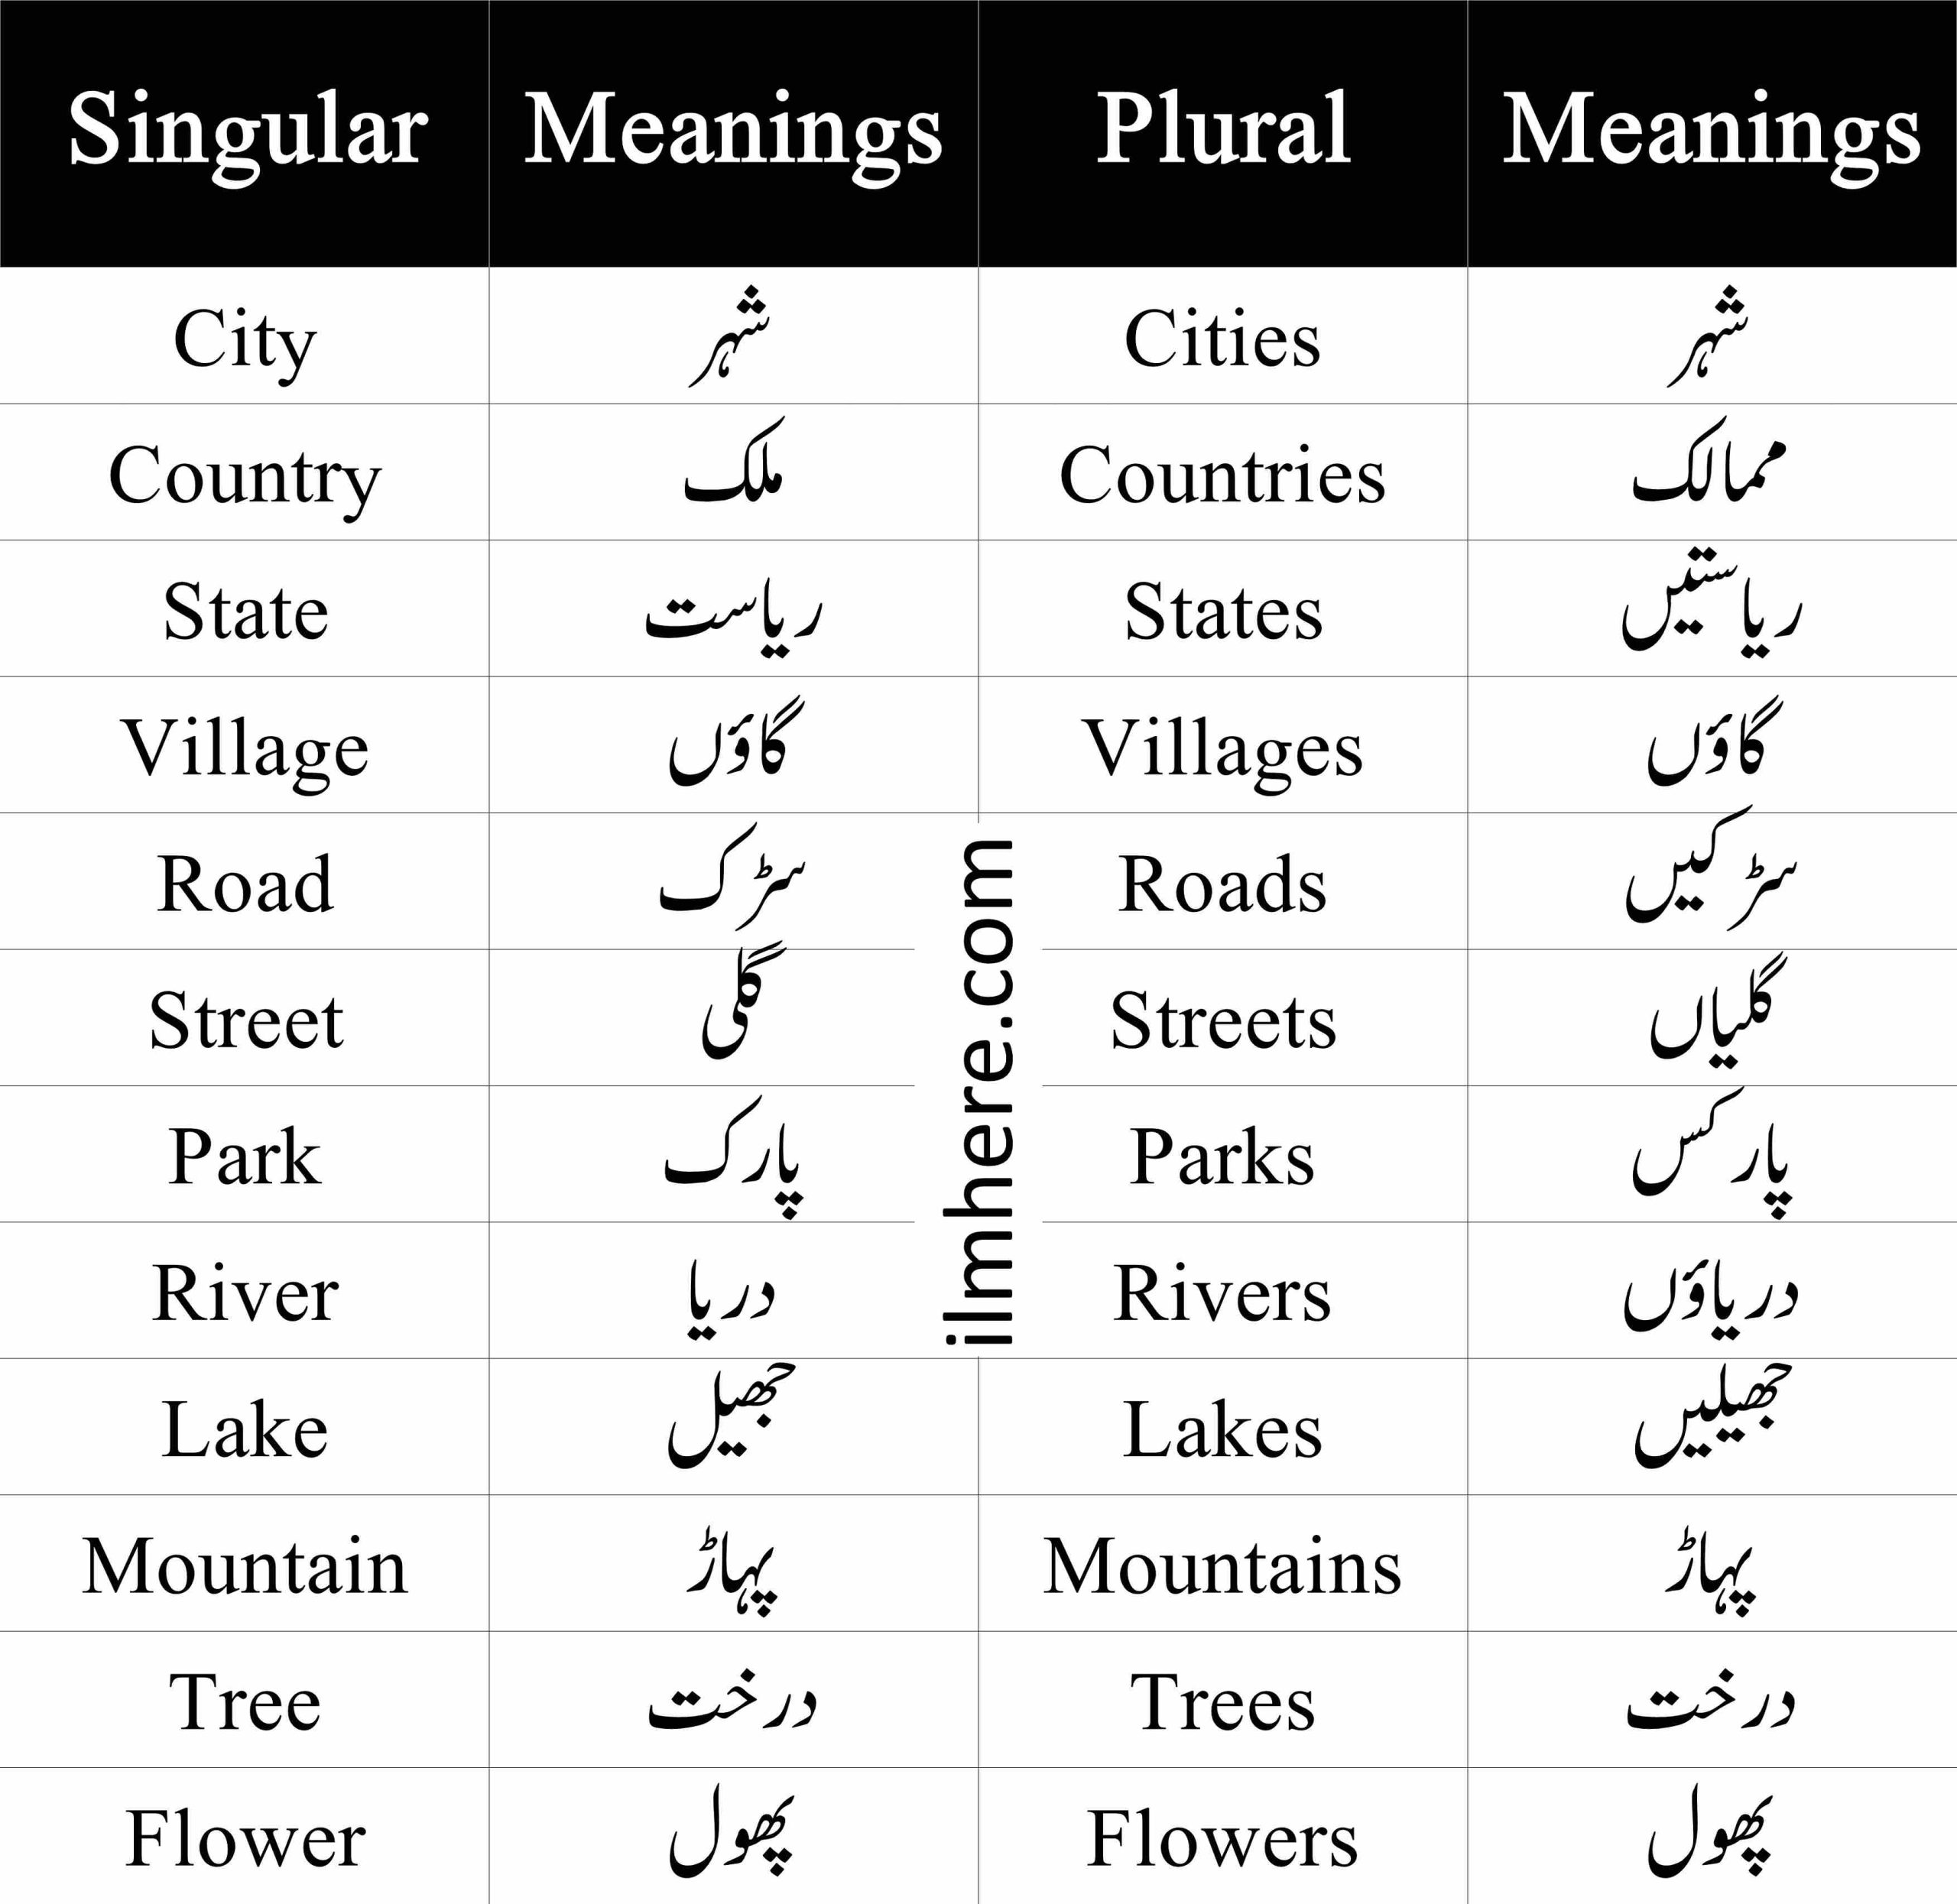 Singular and Plural Nouns